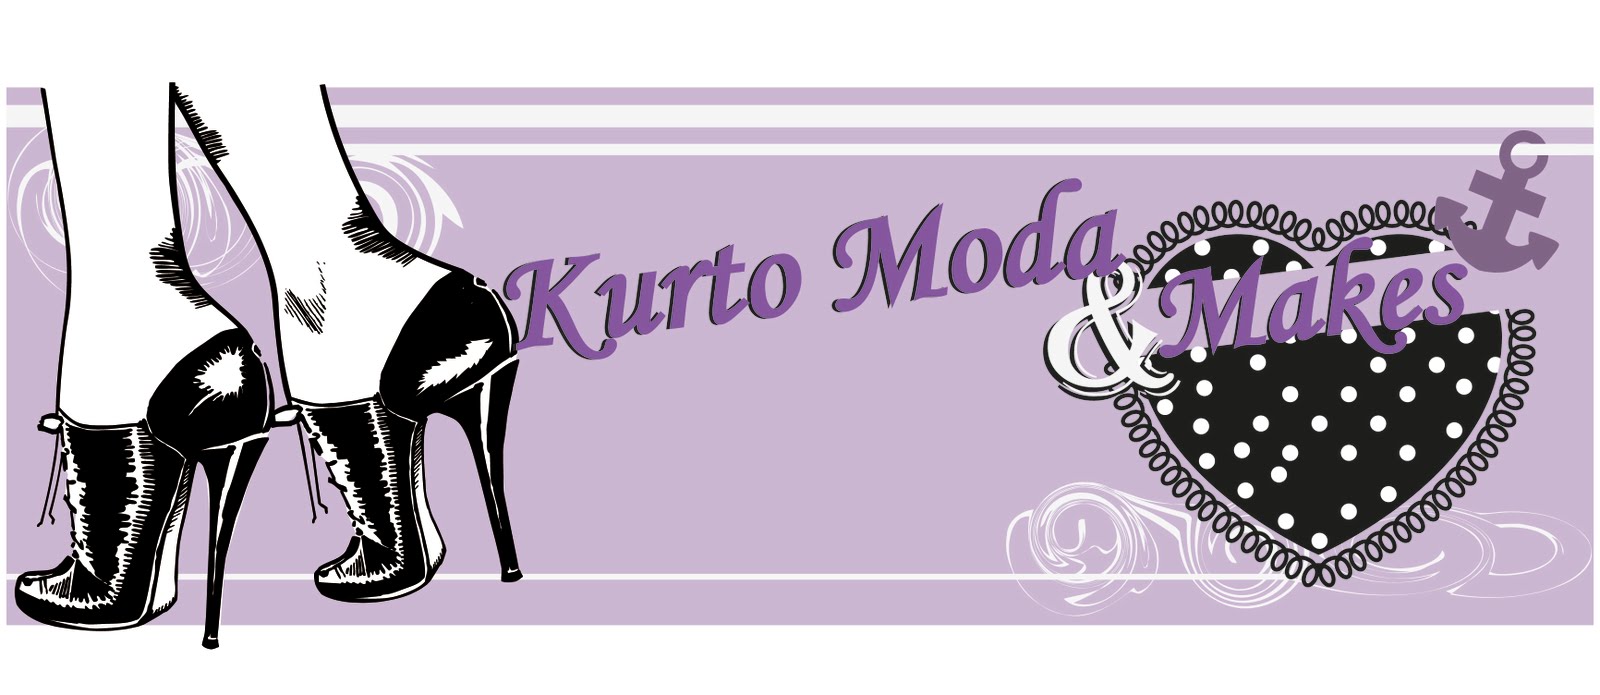 Kurto Moda & Makes!!!